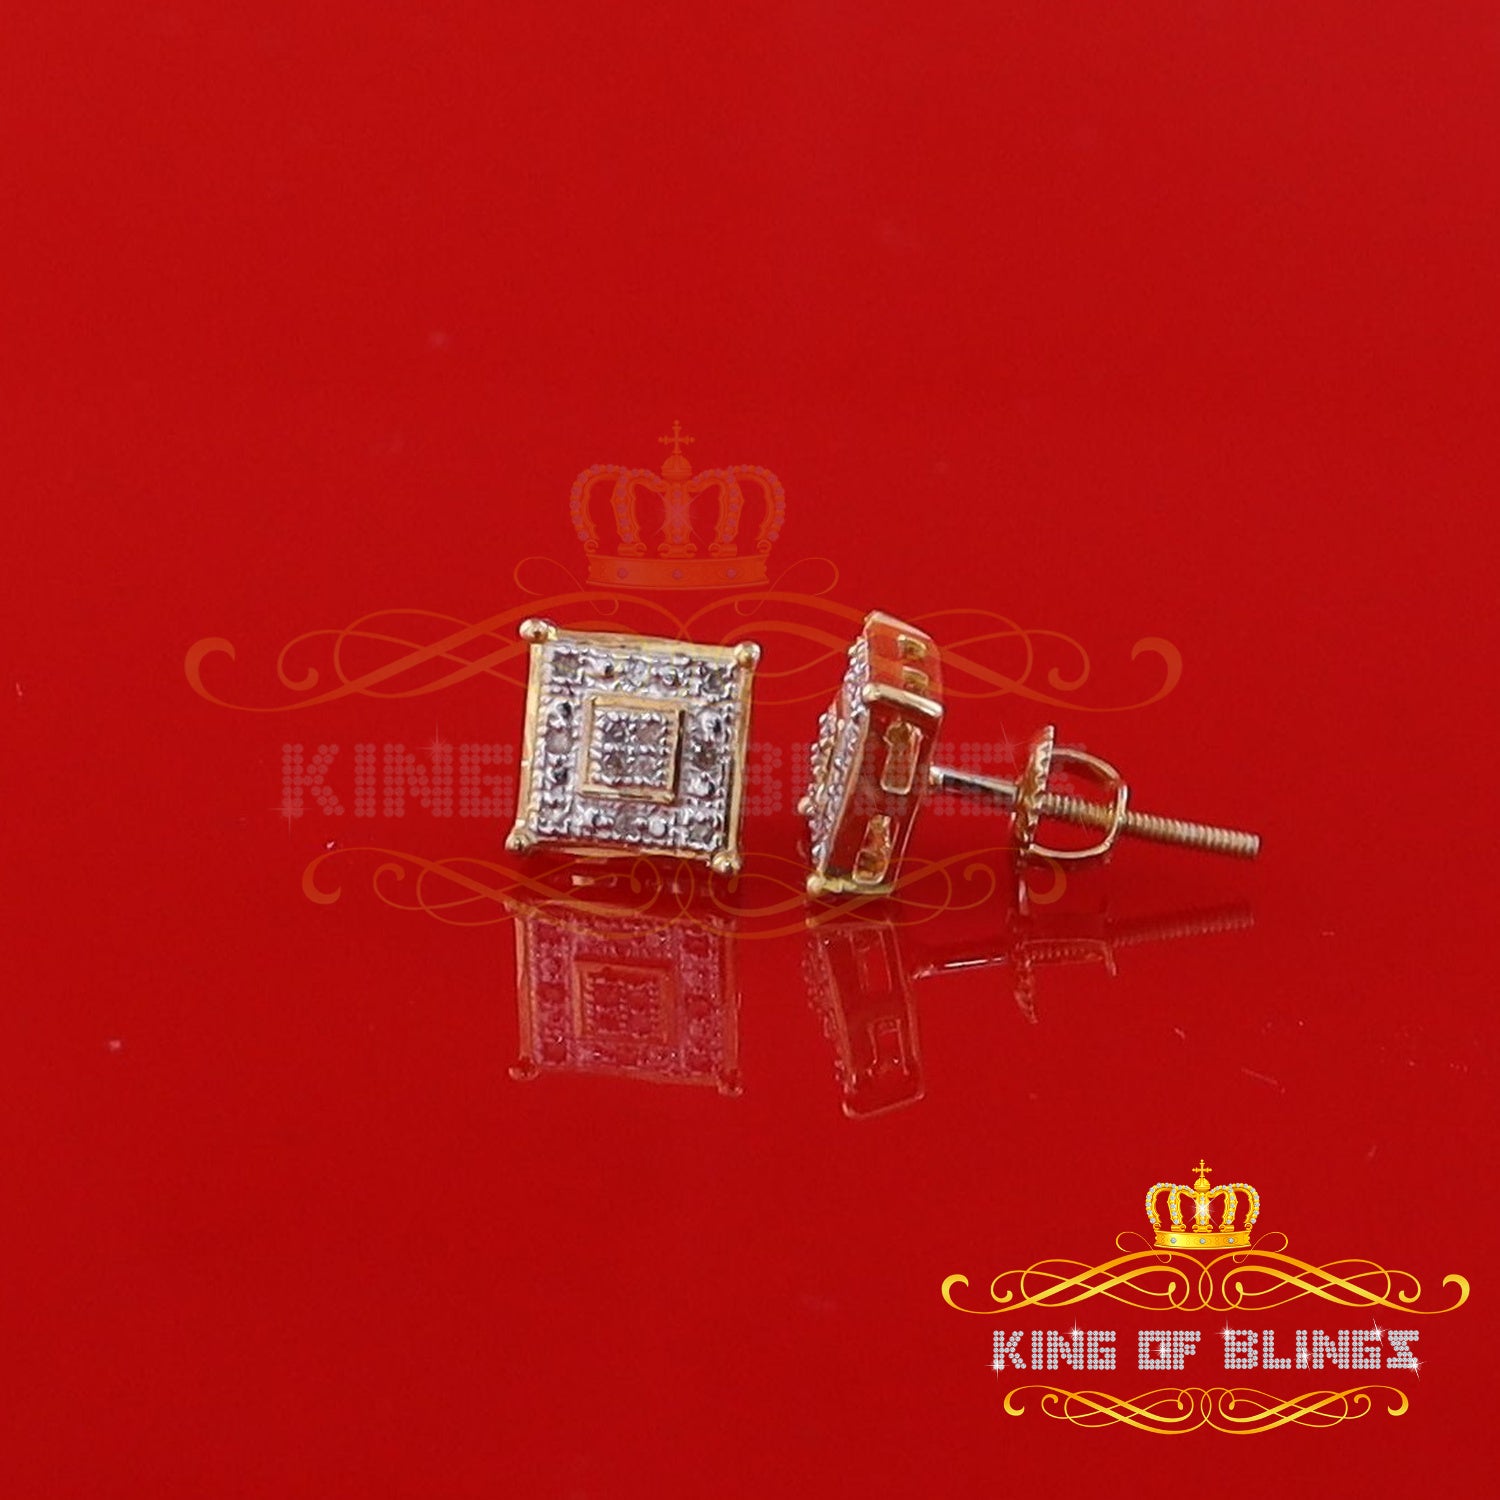 King of Blings-0.05ct Diamond 925 Sterling Silver Yellow Stud Women's & Men's Square Earrings KING OF BLINGS